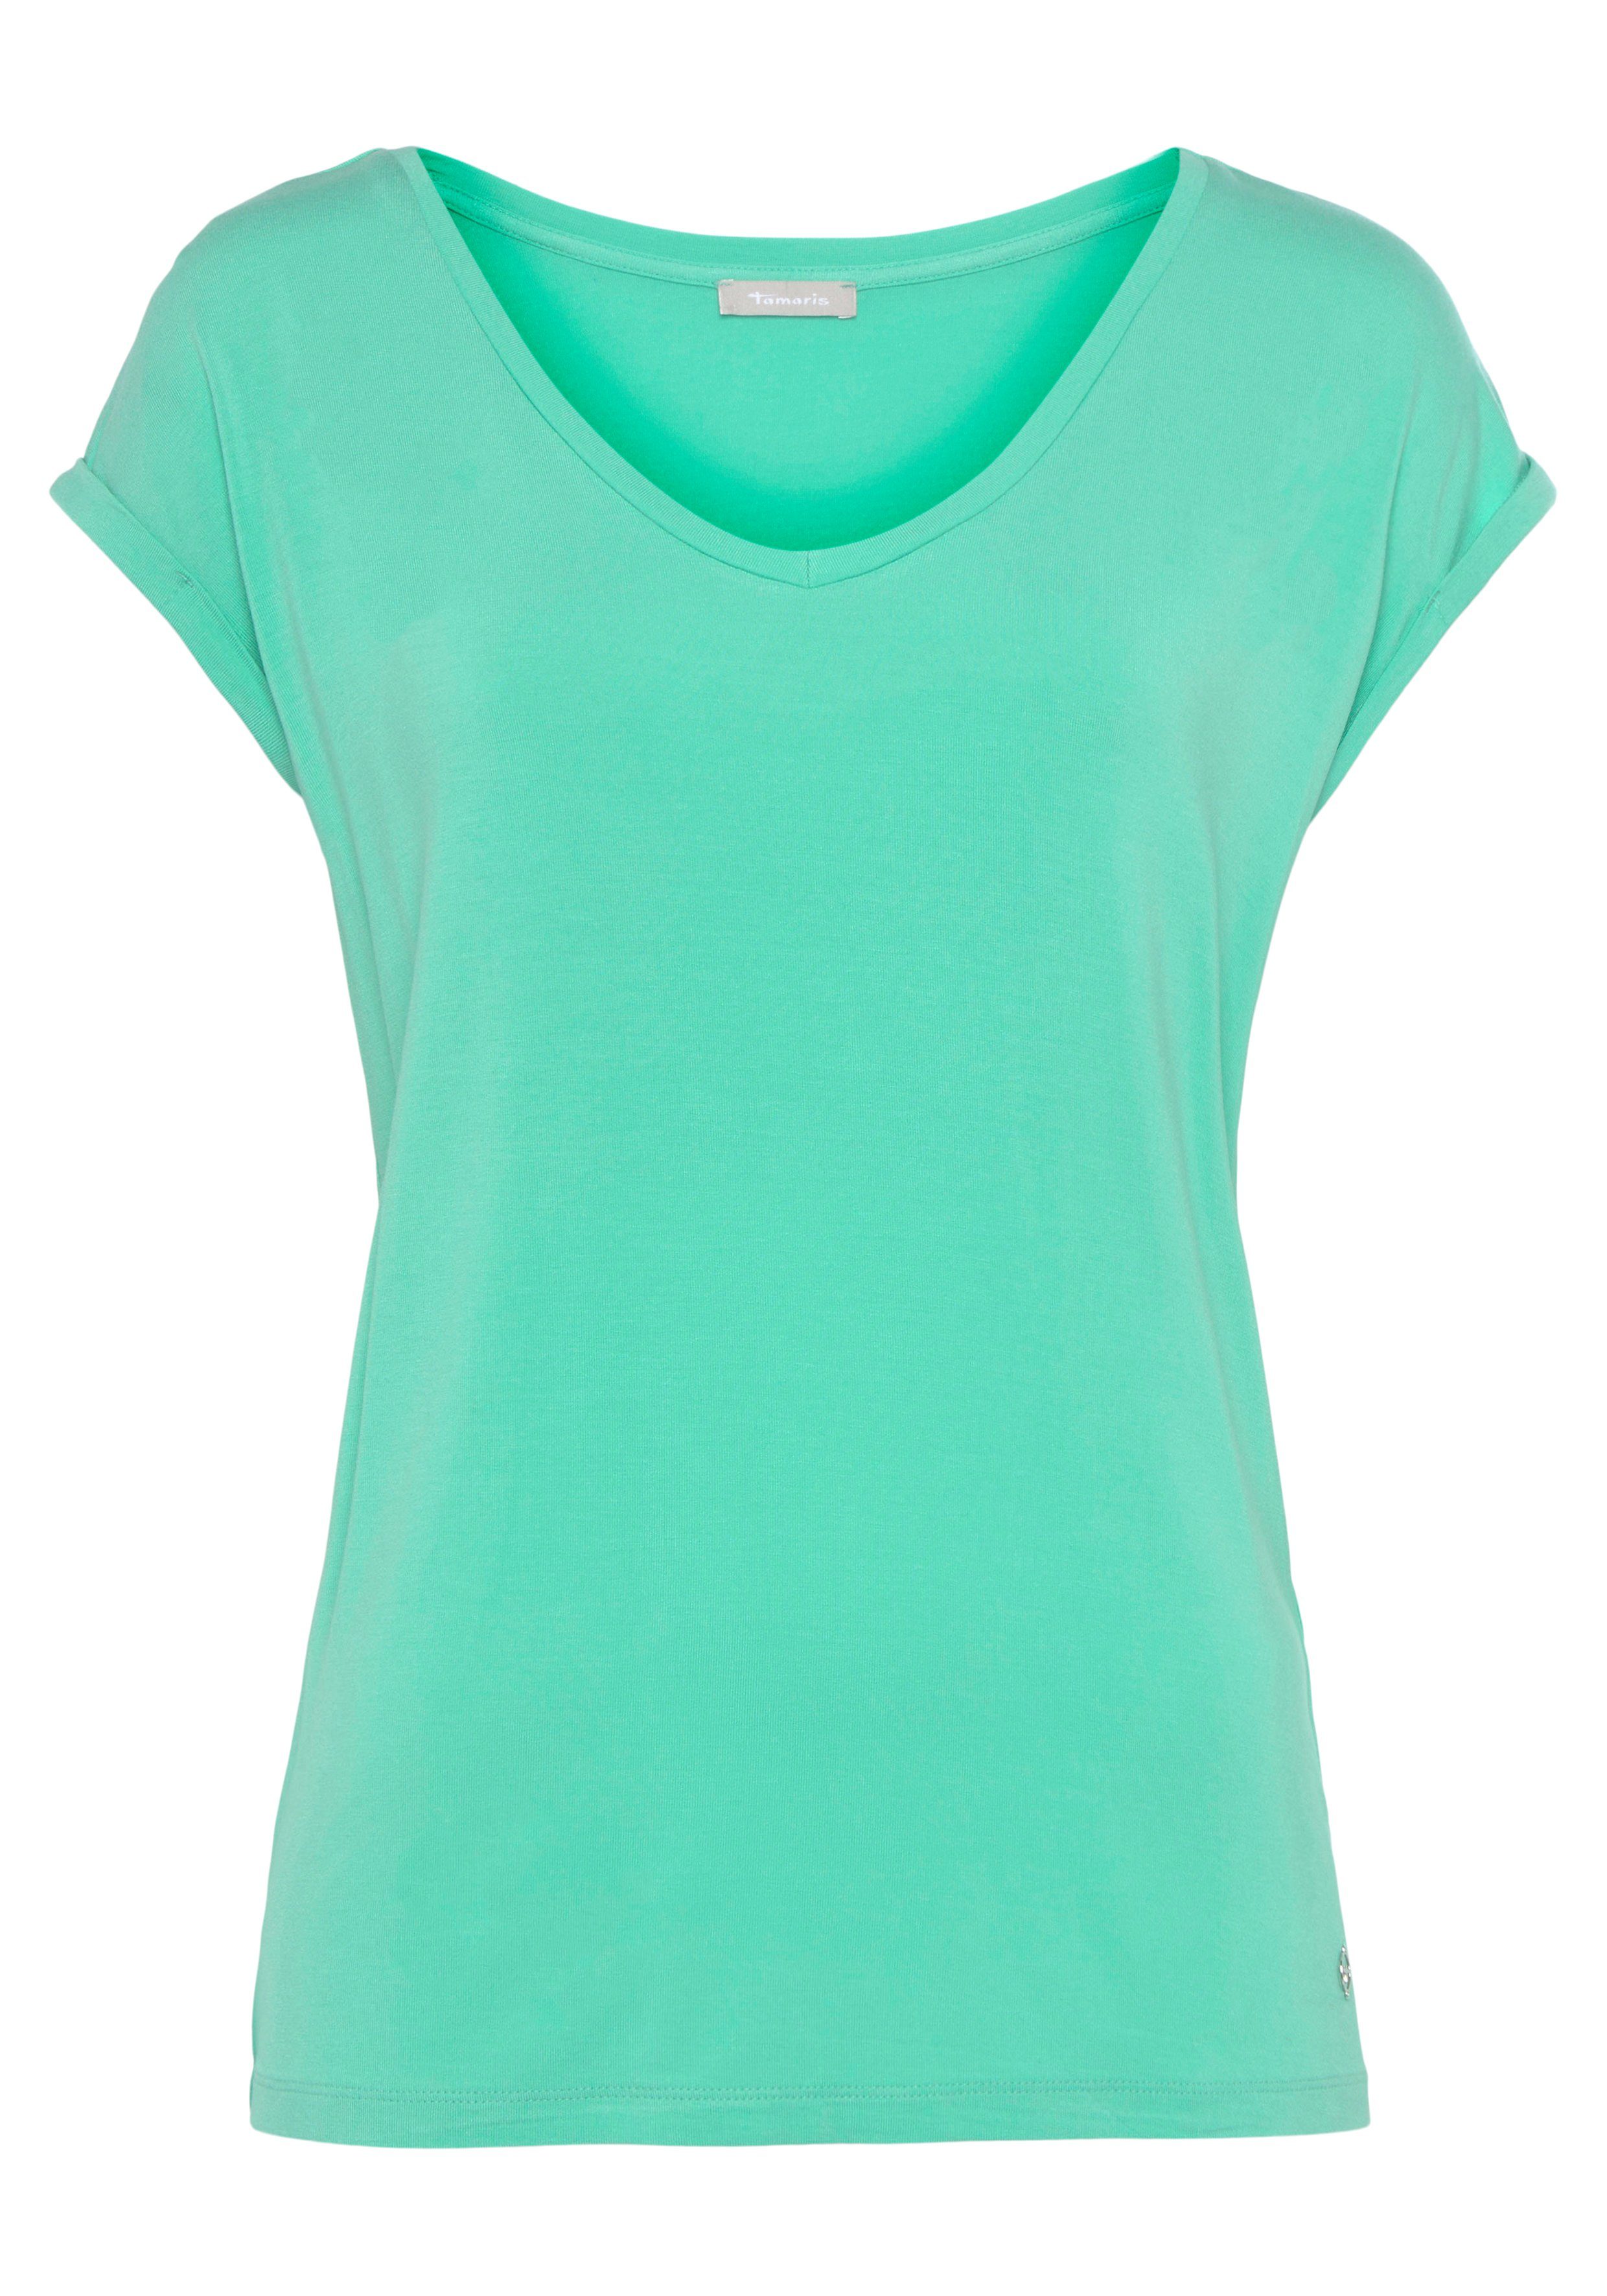 Tamaris V-Shirt mit lockerer neonmint Passform